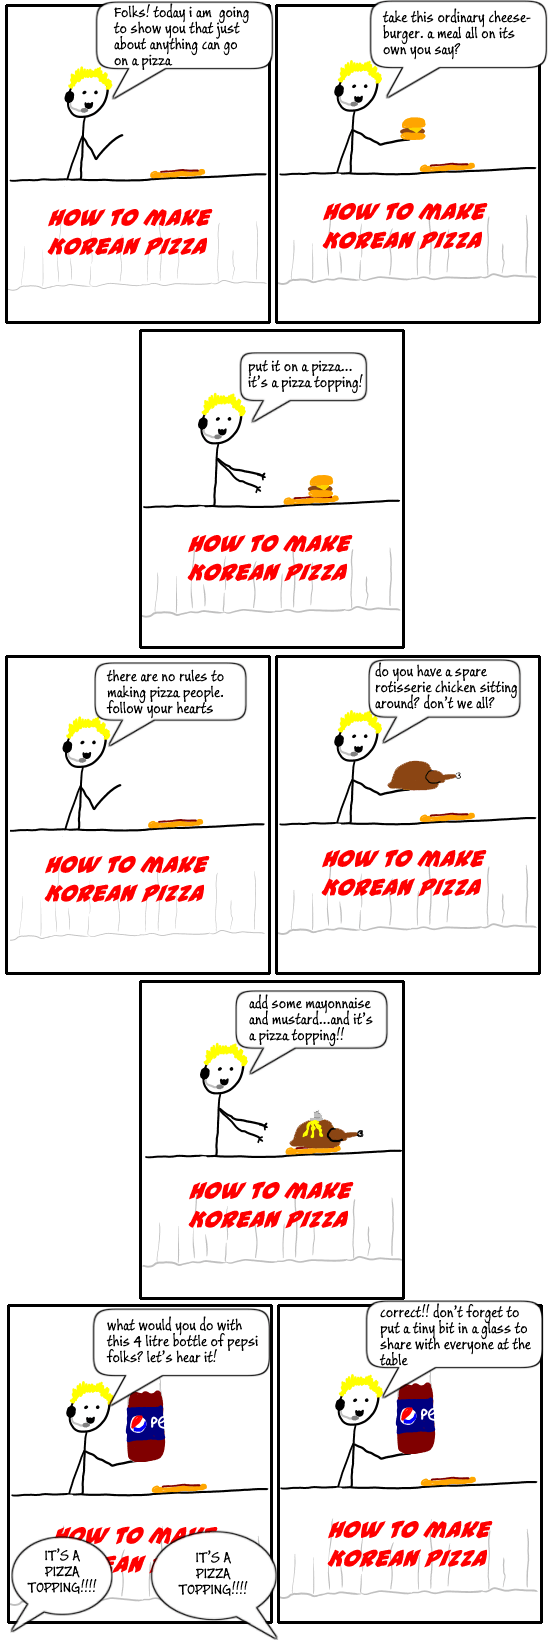 Korean Pizza Infomercial 